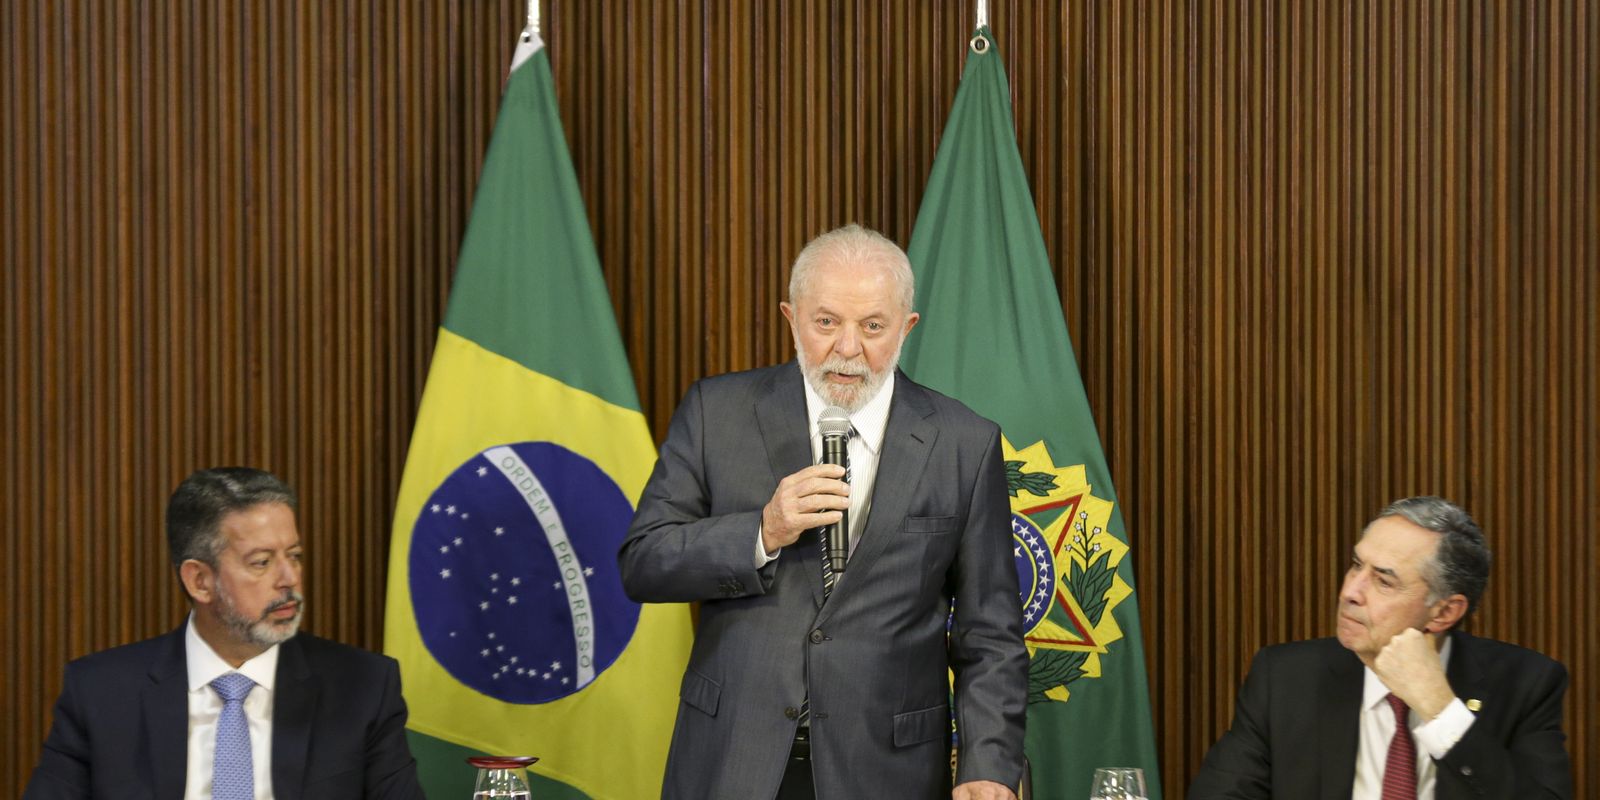 presidir-g20-e-maior-responsabilidade-do-brasil,-diz-lula